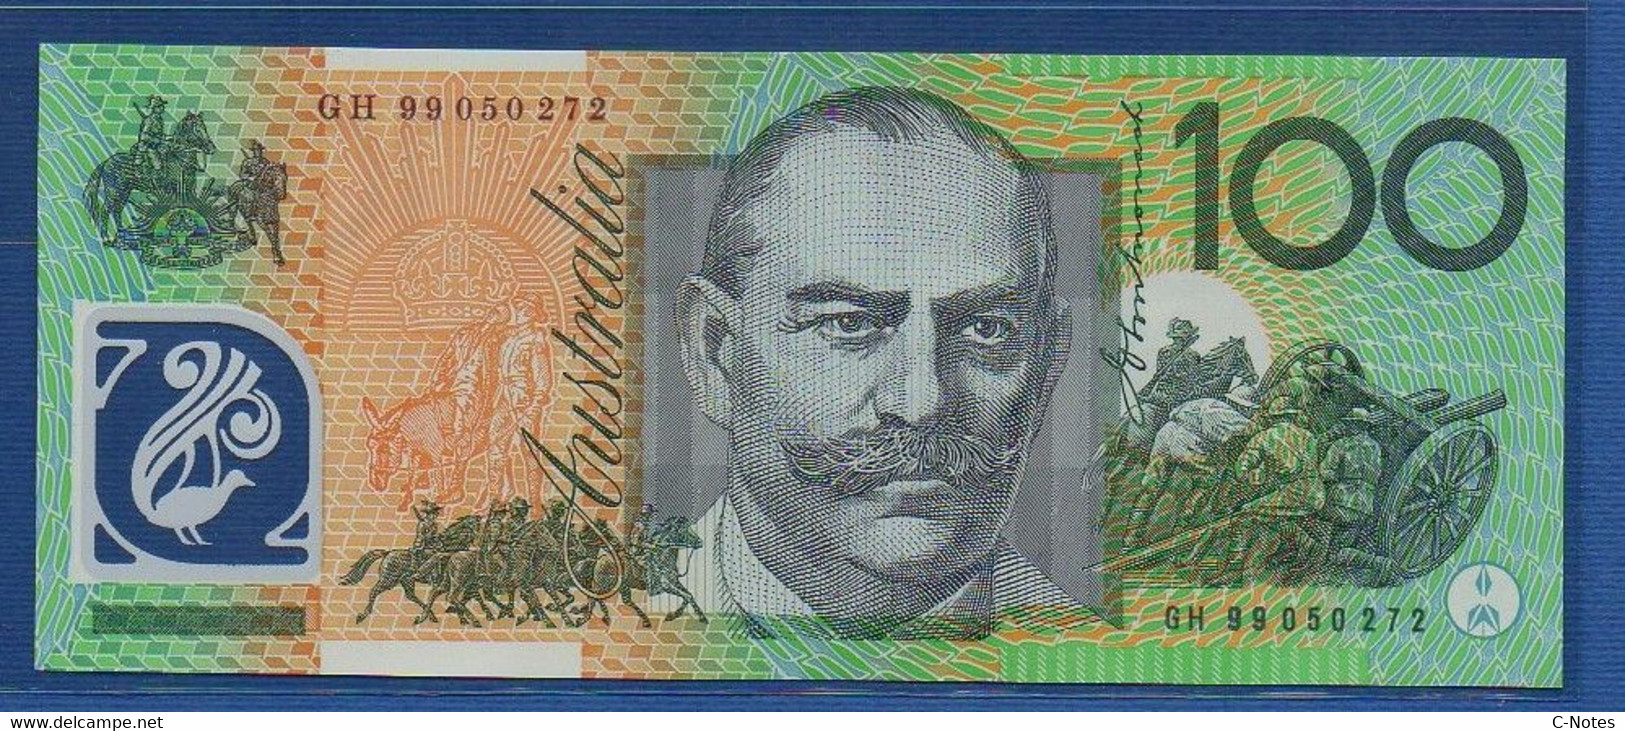 AUSTRALIA - P.55b - 100 Dollars 1999 UNC, Serie GH 99 050272 - 1992-2001 (polymeerbiljetten)